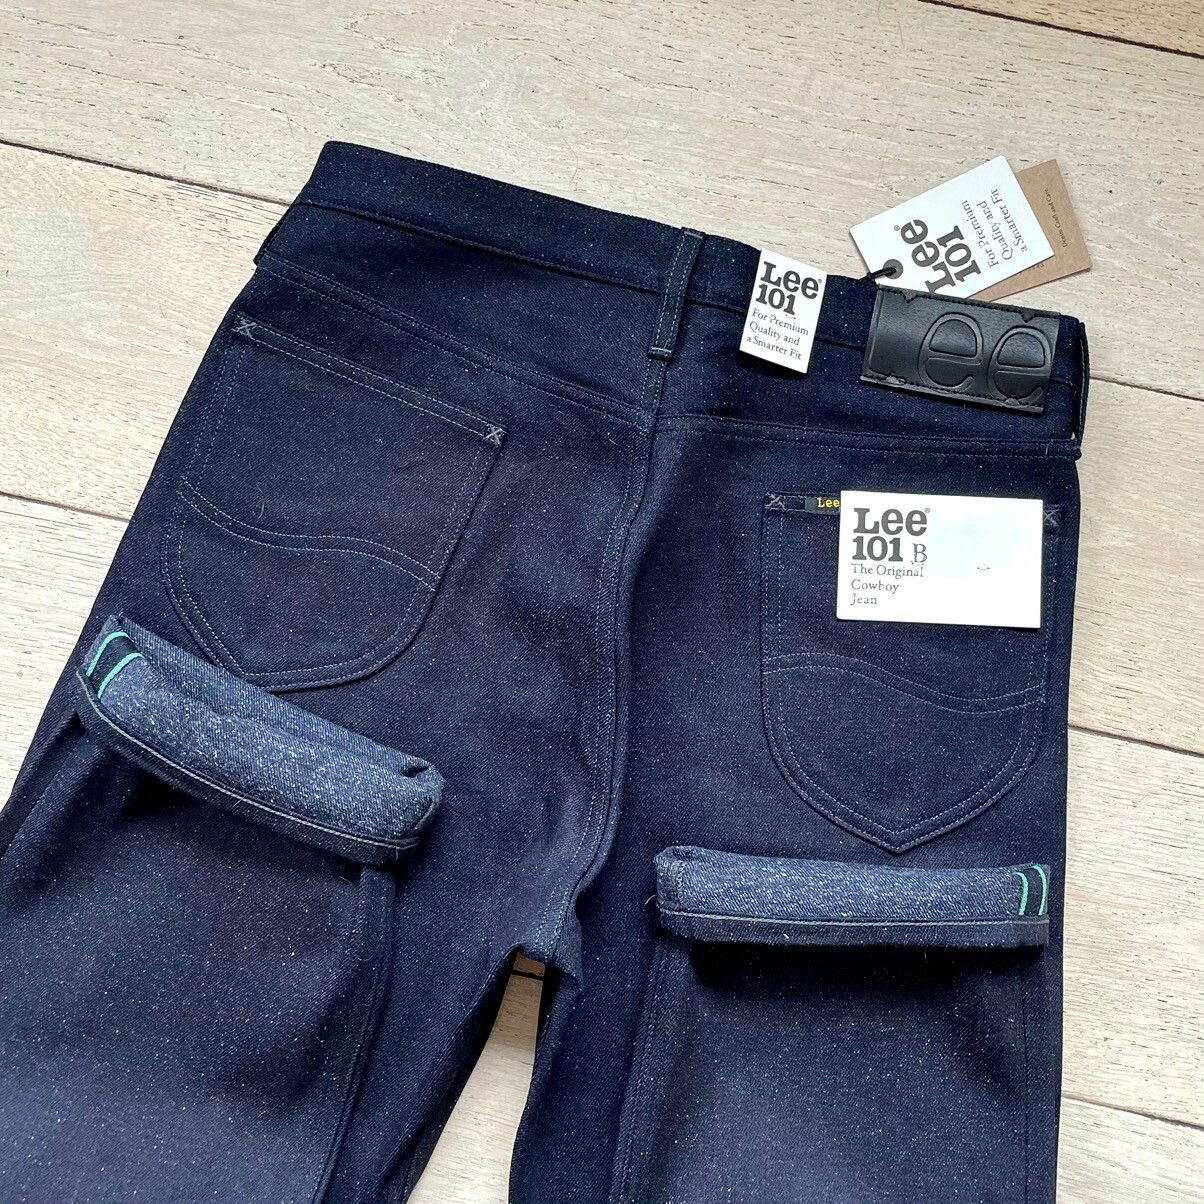 Lee LEE 101B 1946 Cowboy jeans dry selvedge | Grailed